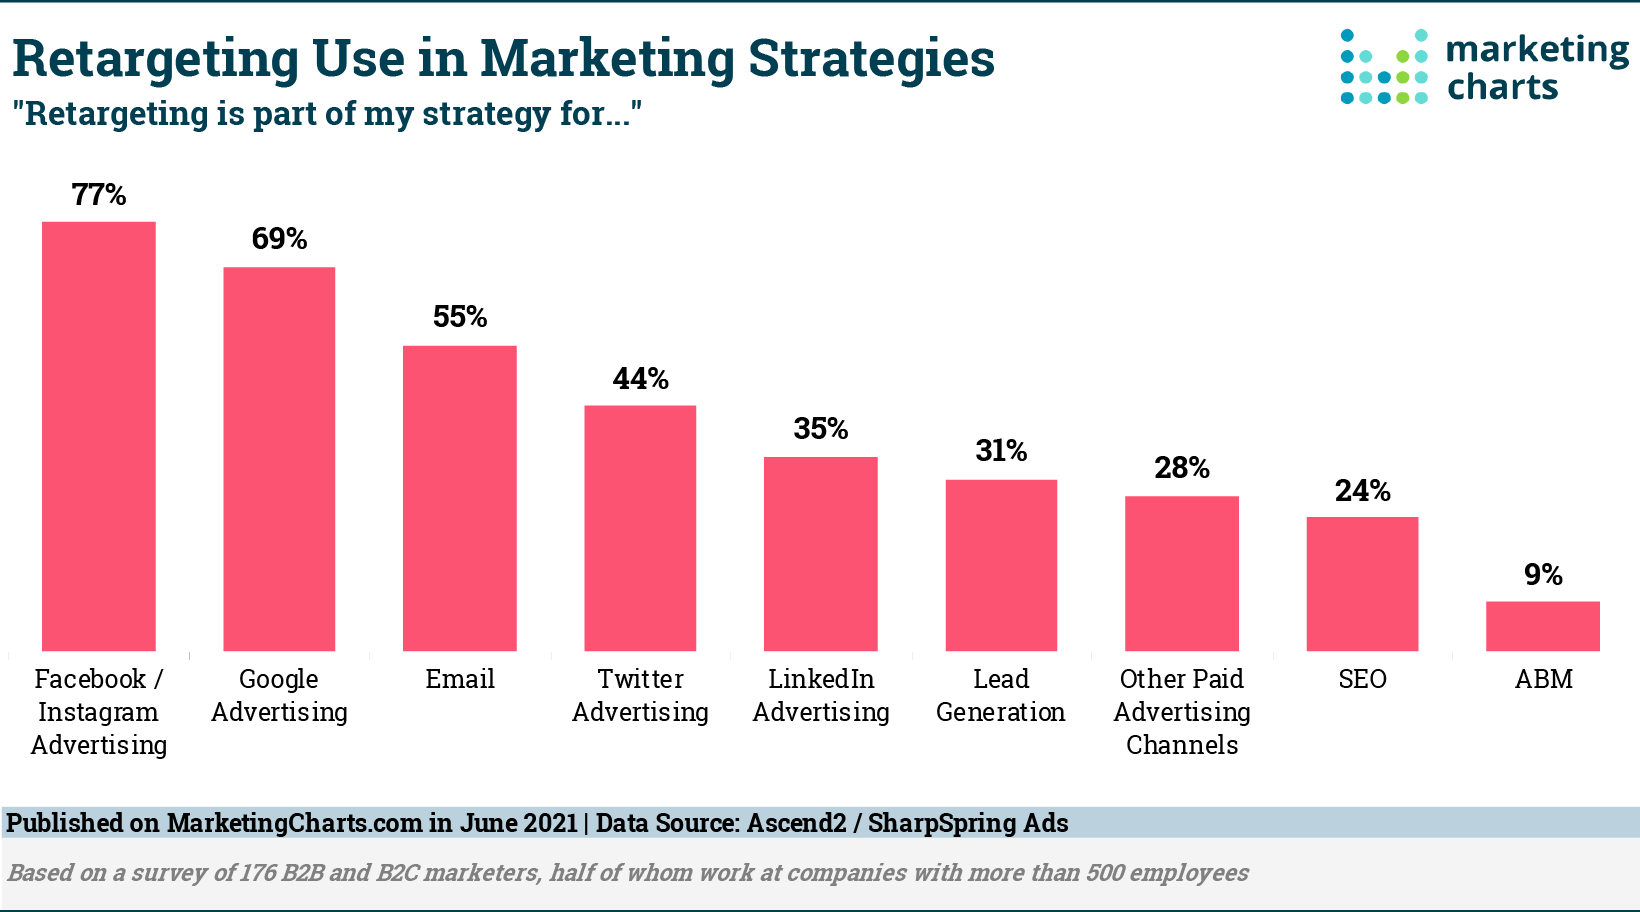 Bar chart showing social media statistics on retargeting ads in marketing strategies..